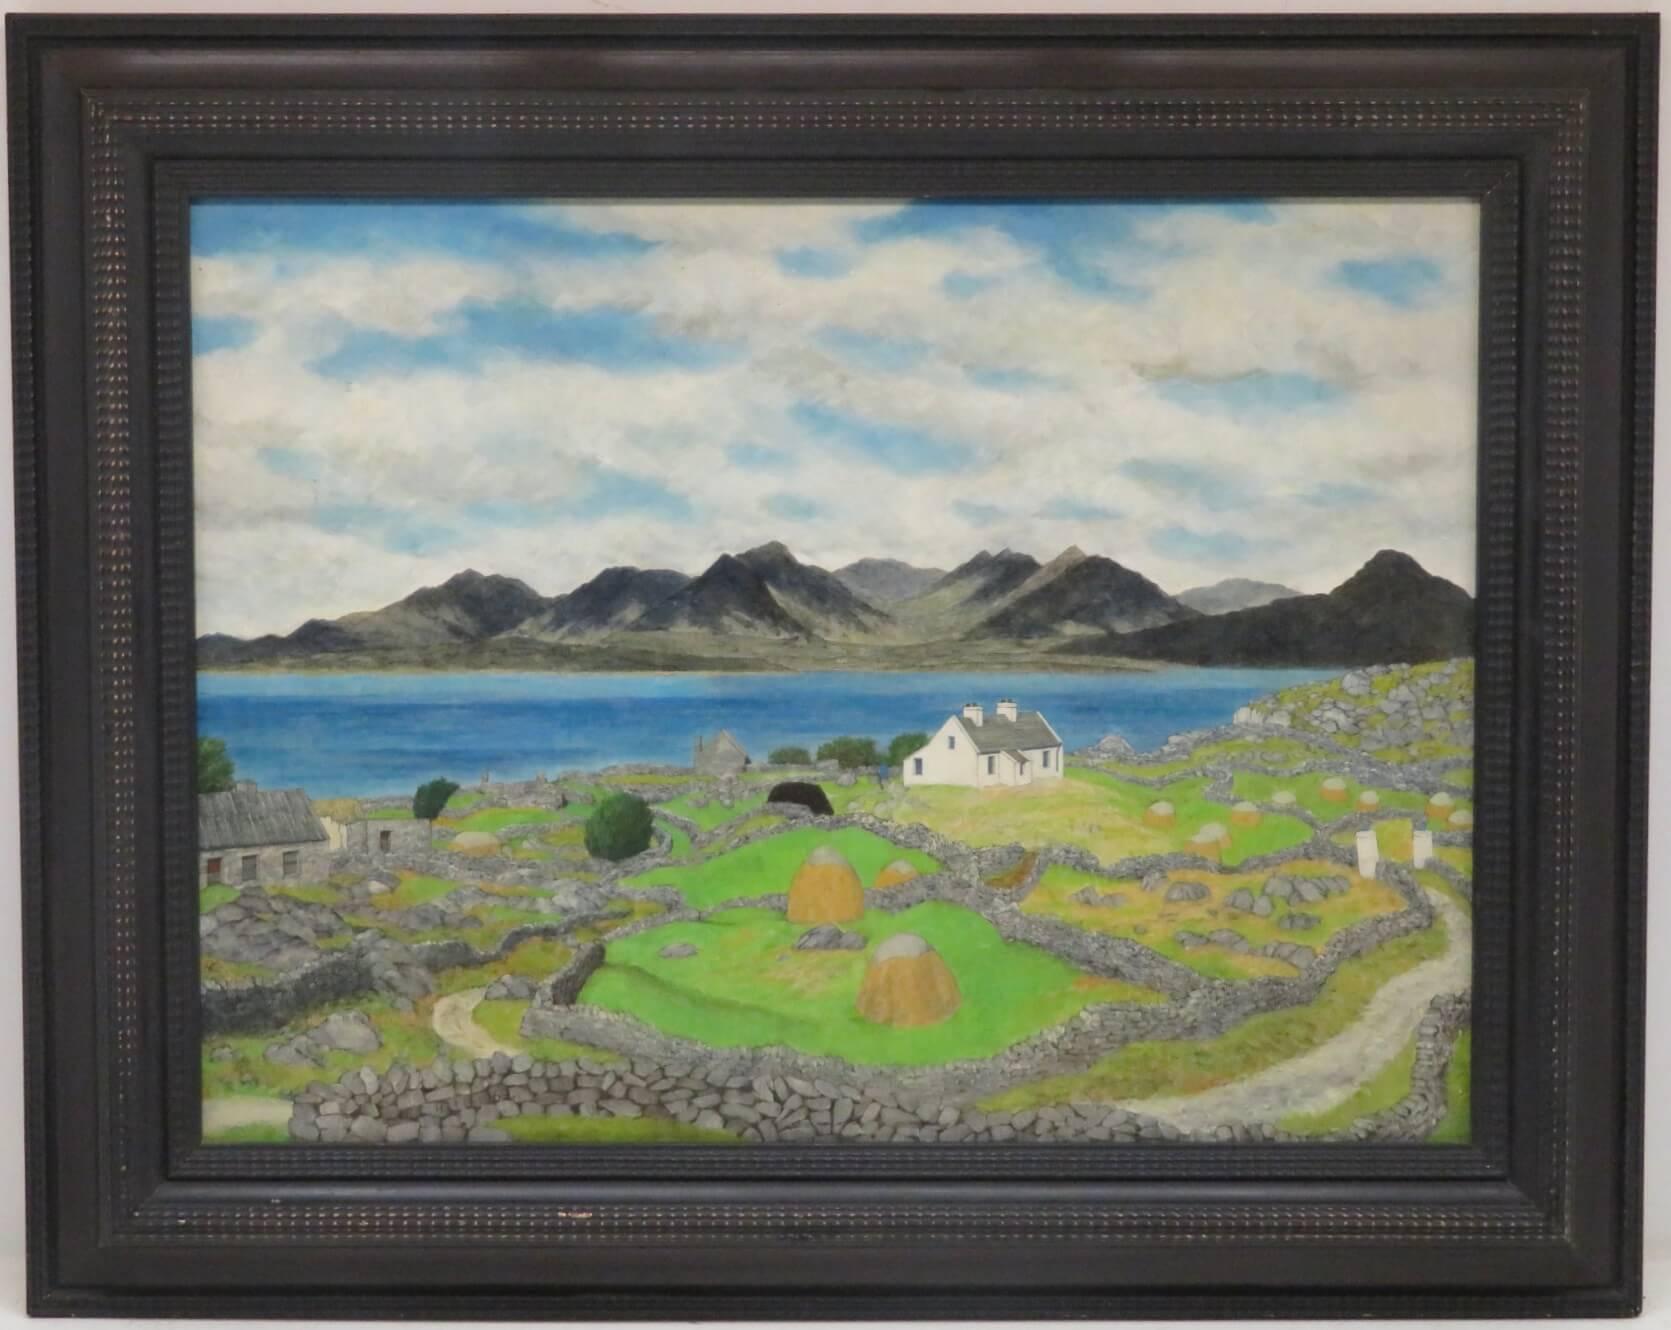 Christopher hall Landscape Painting - Original MID CENTURY Irish Landscape oil painting LETTERARD CO GALWAY IRELAND 